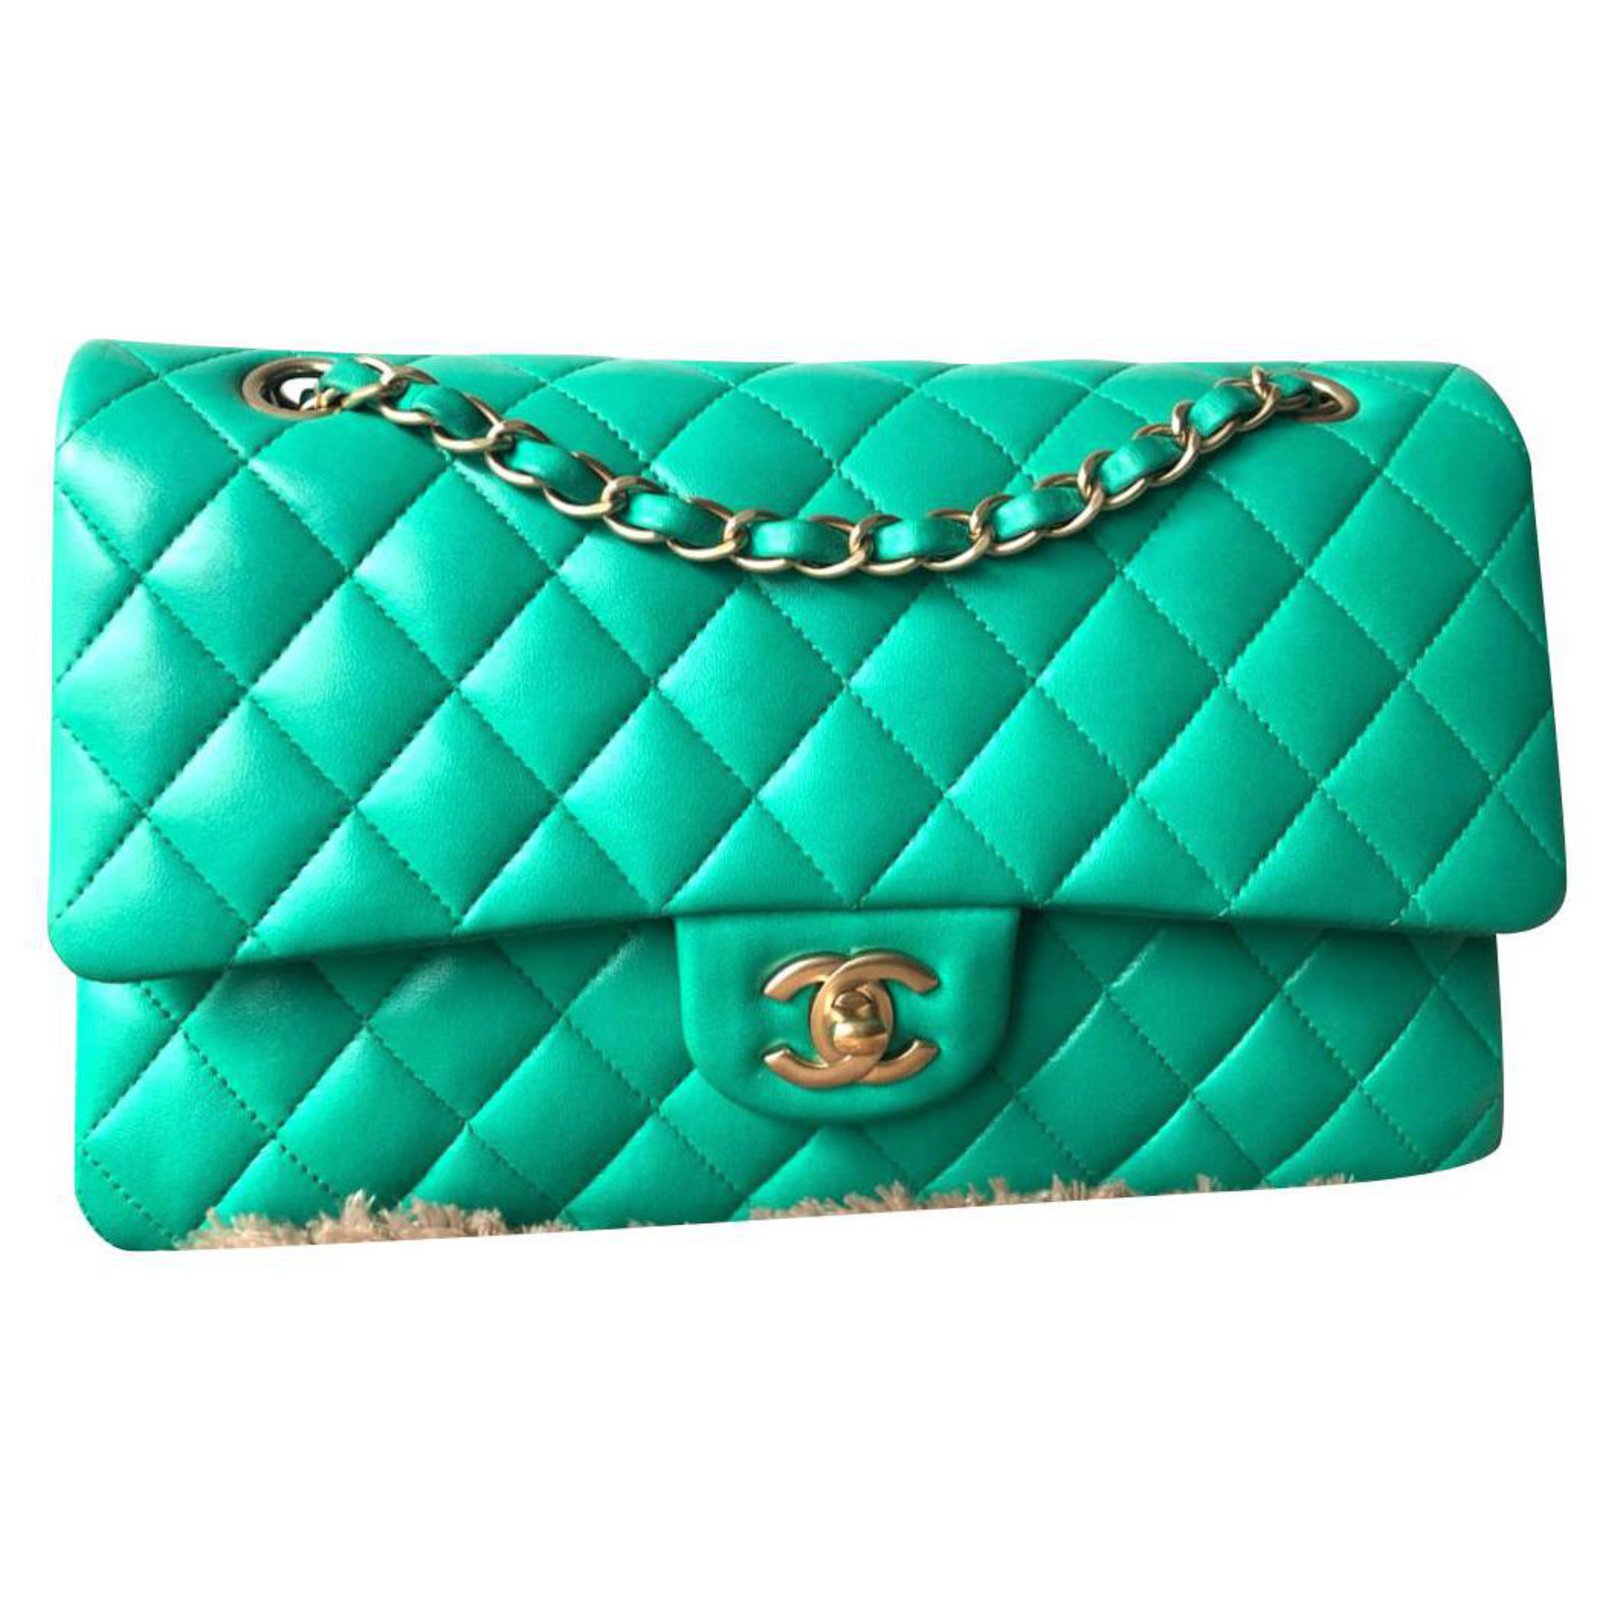 Chanel Green Classic New Mini Patent Leather Flap Bag